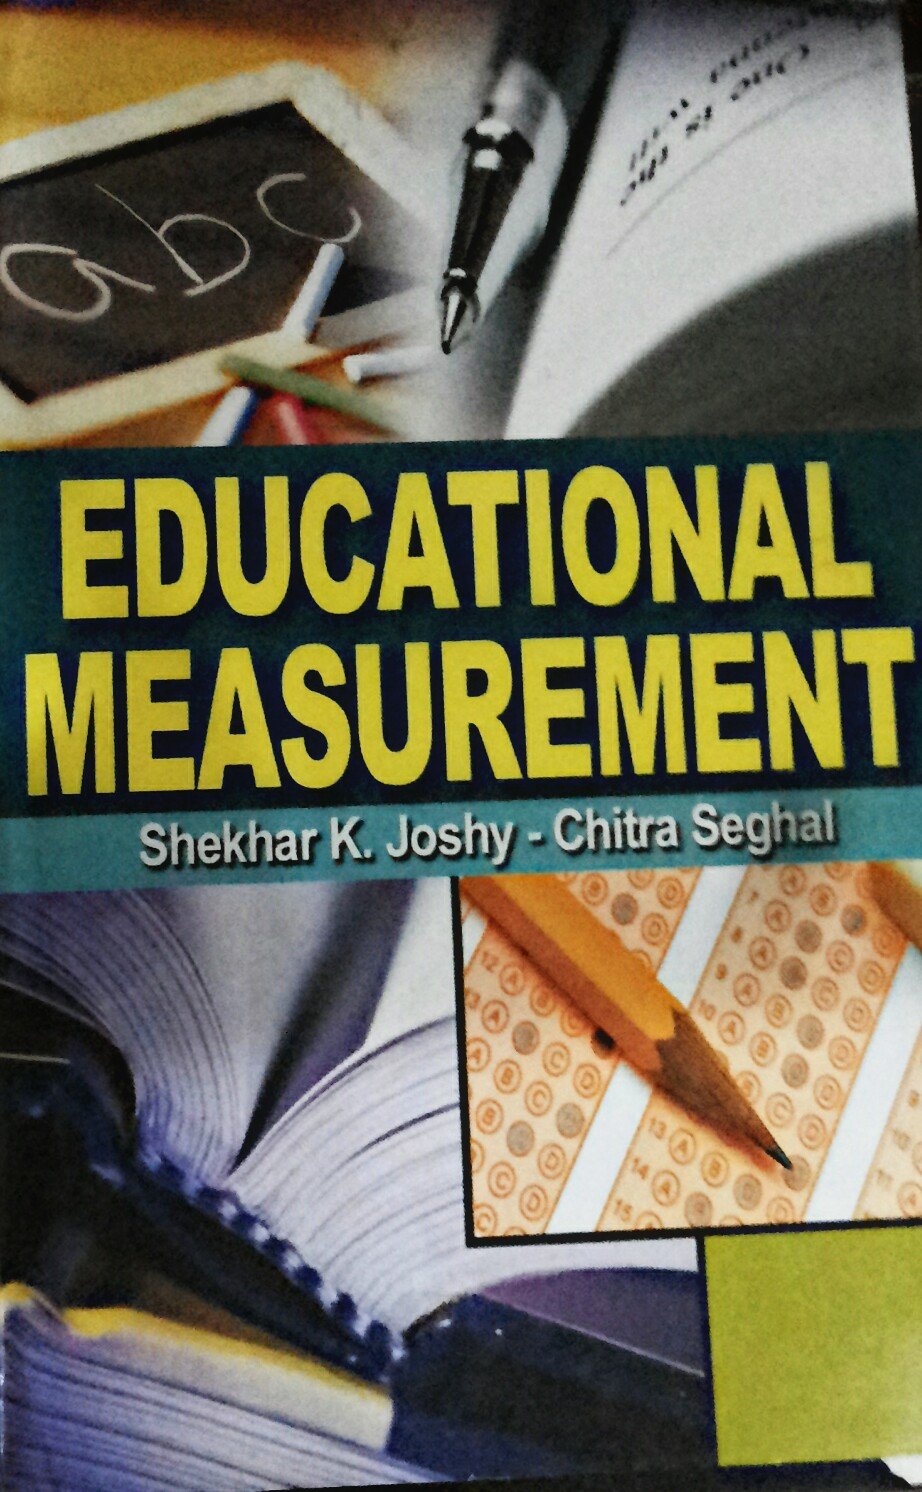 Educational Measurement - Shekhar K. Joshy & Chitra Seghal